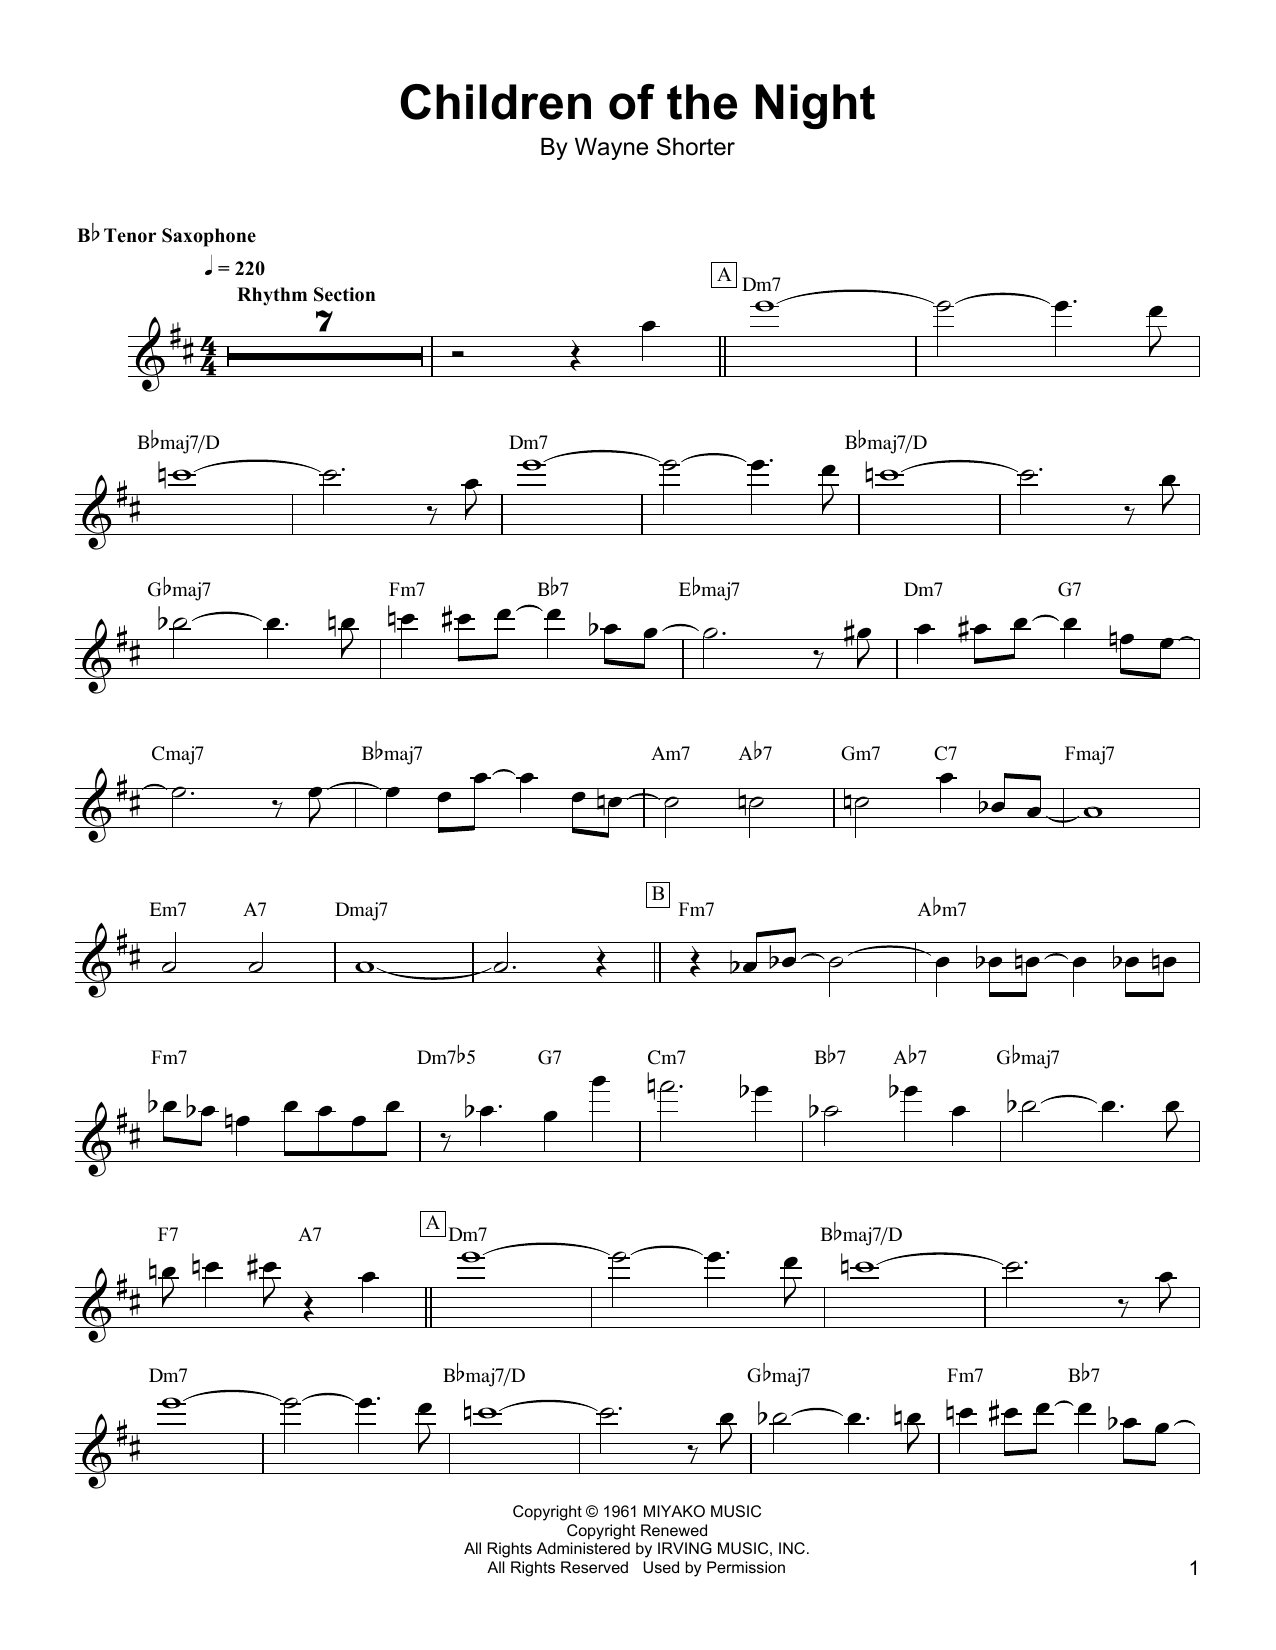 Wayne Shorter Children Of The Night Sheet Music Notes & Chords for Tenor Sax Transcription - Download or Print PDF